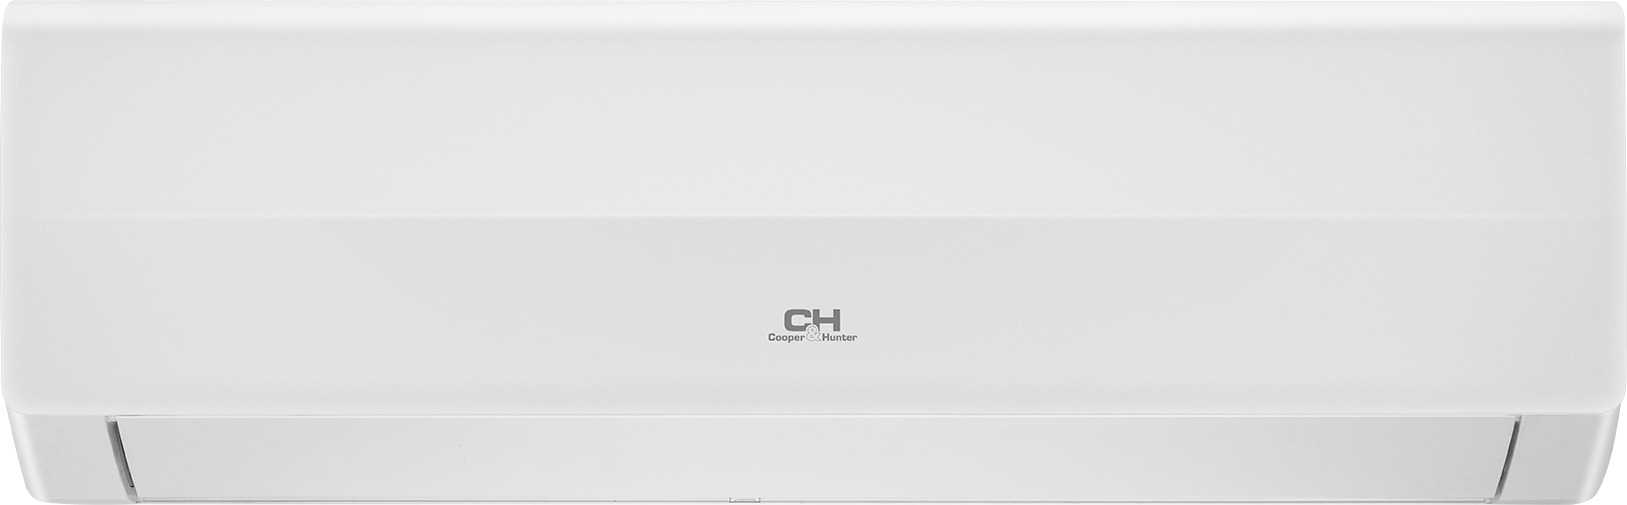 C&H Image